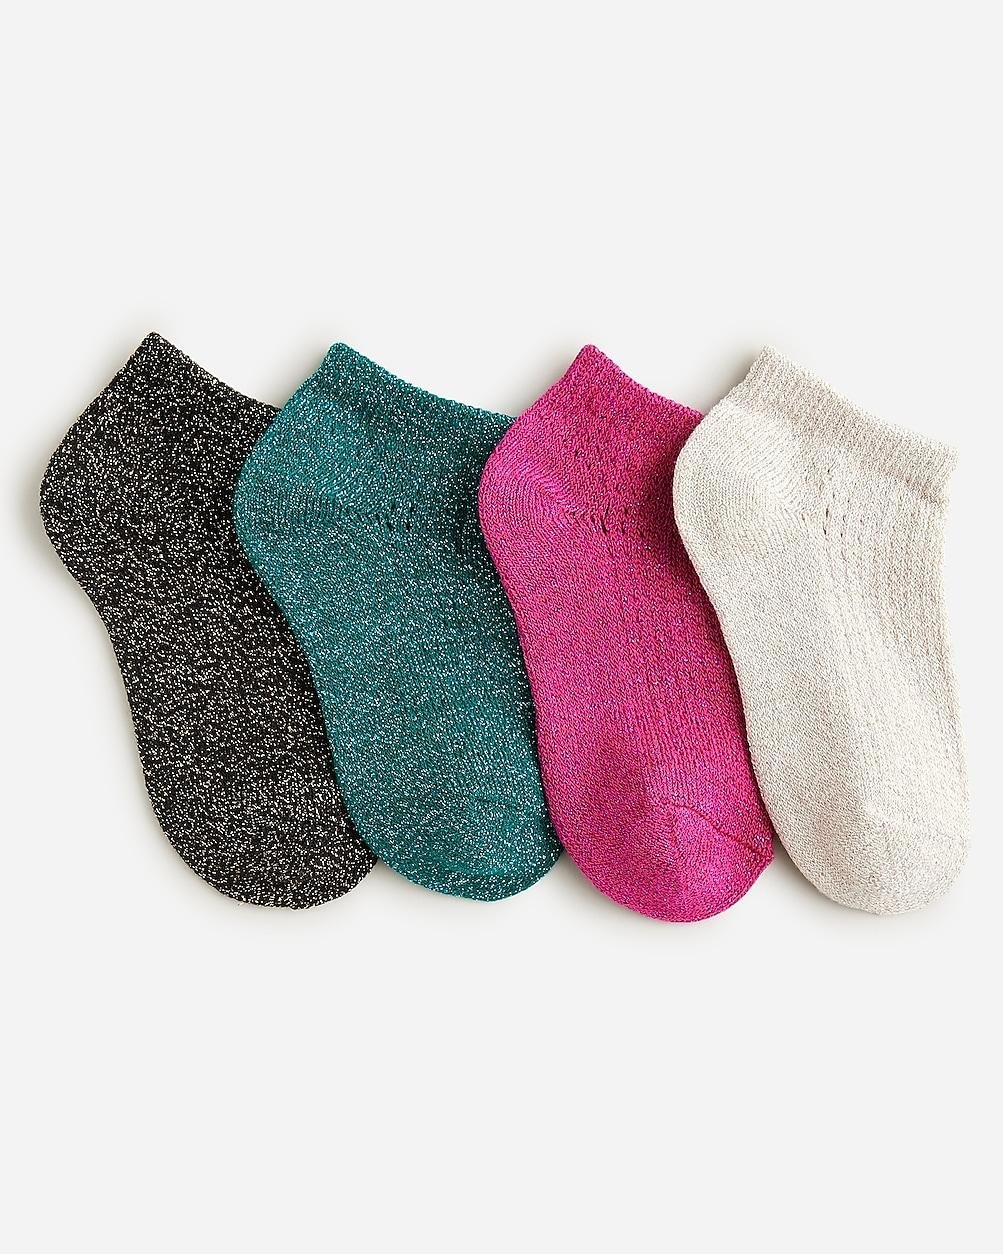 Girls' metallic ankle socks four-pack by J.CREW